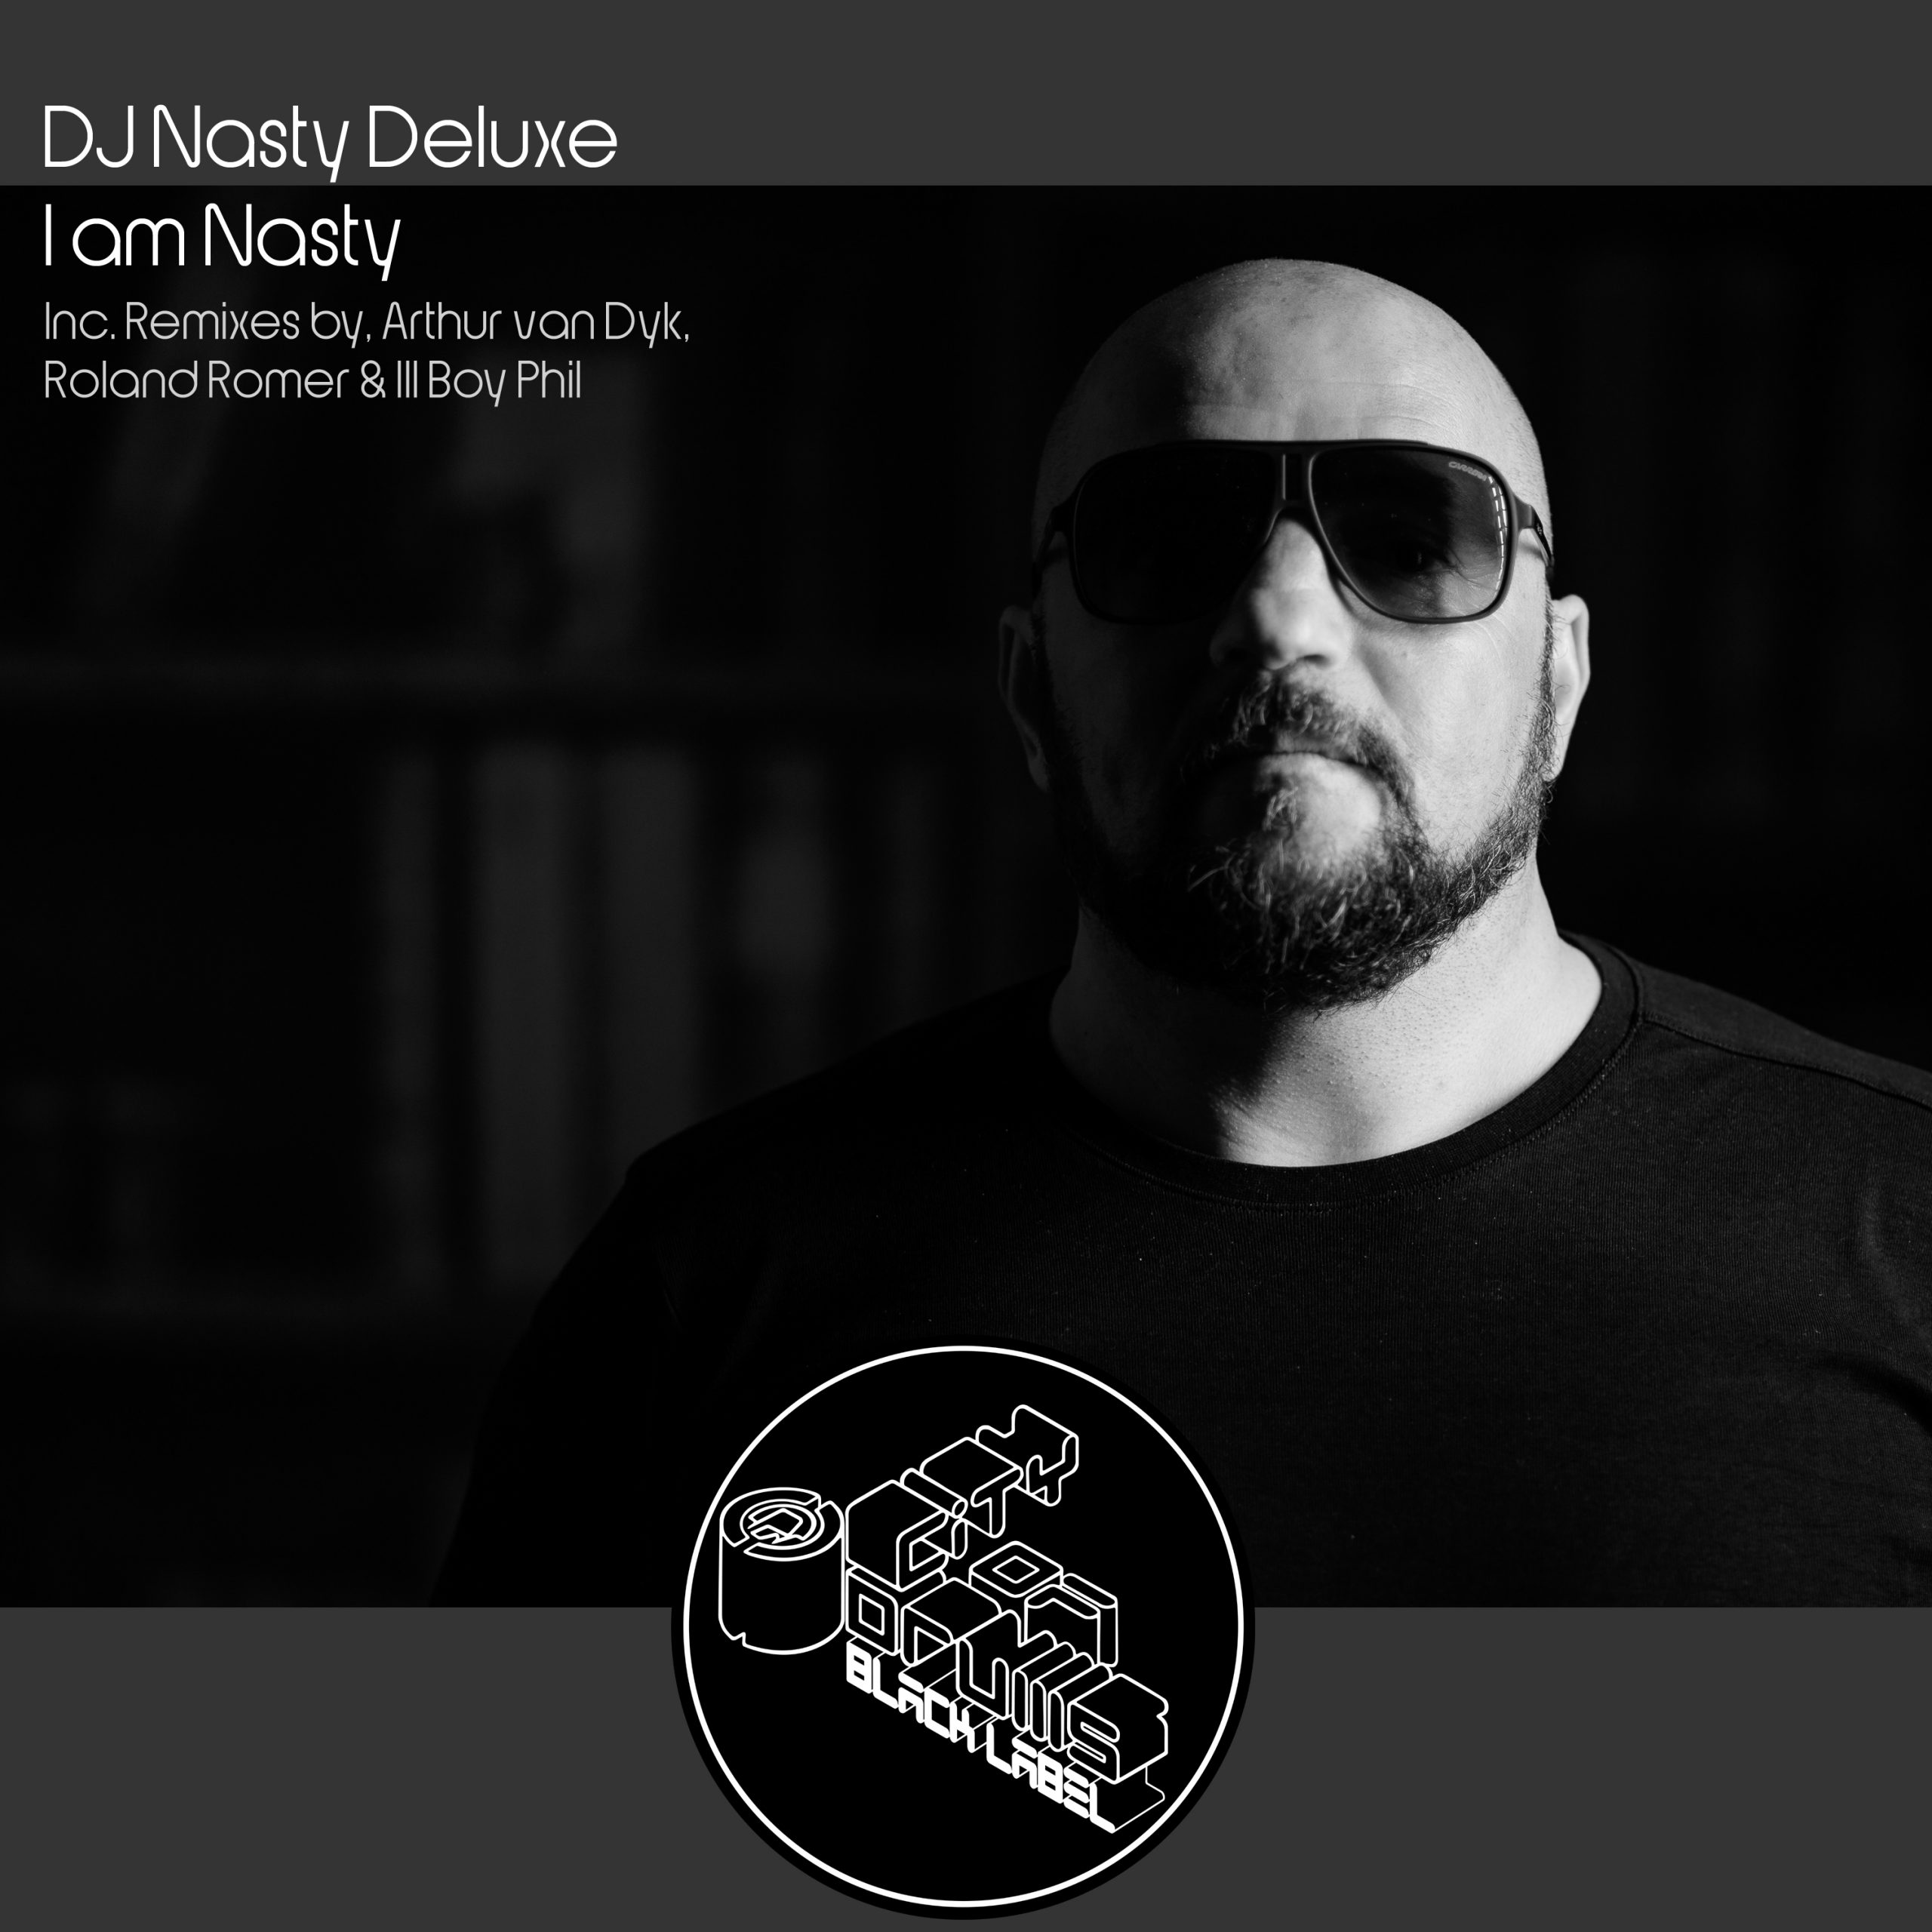 OUT NOW!!! I am Nasty von DJ Nasty Deluxe! 5